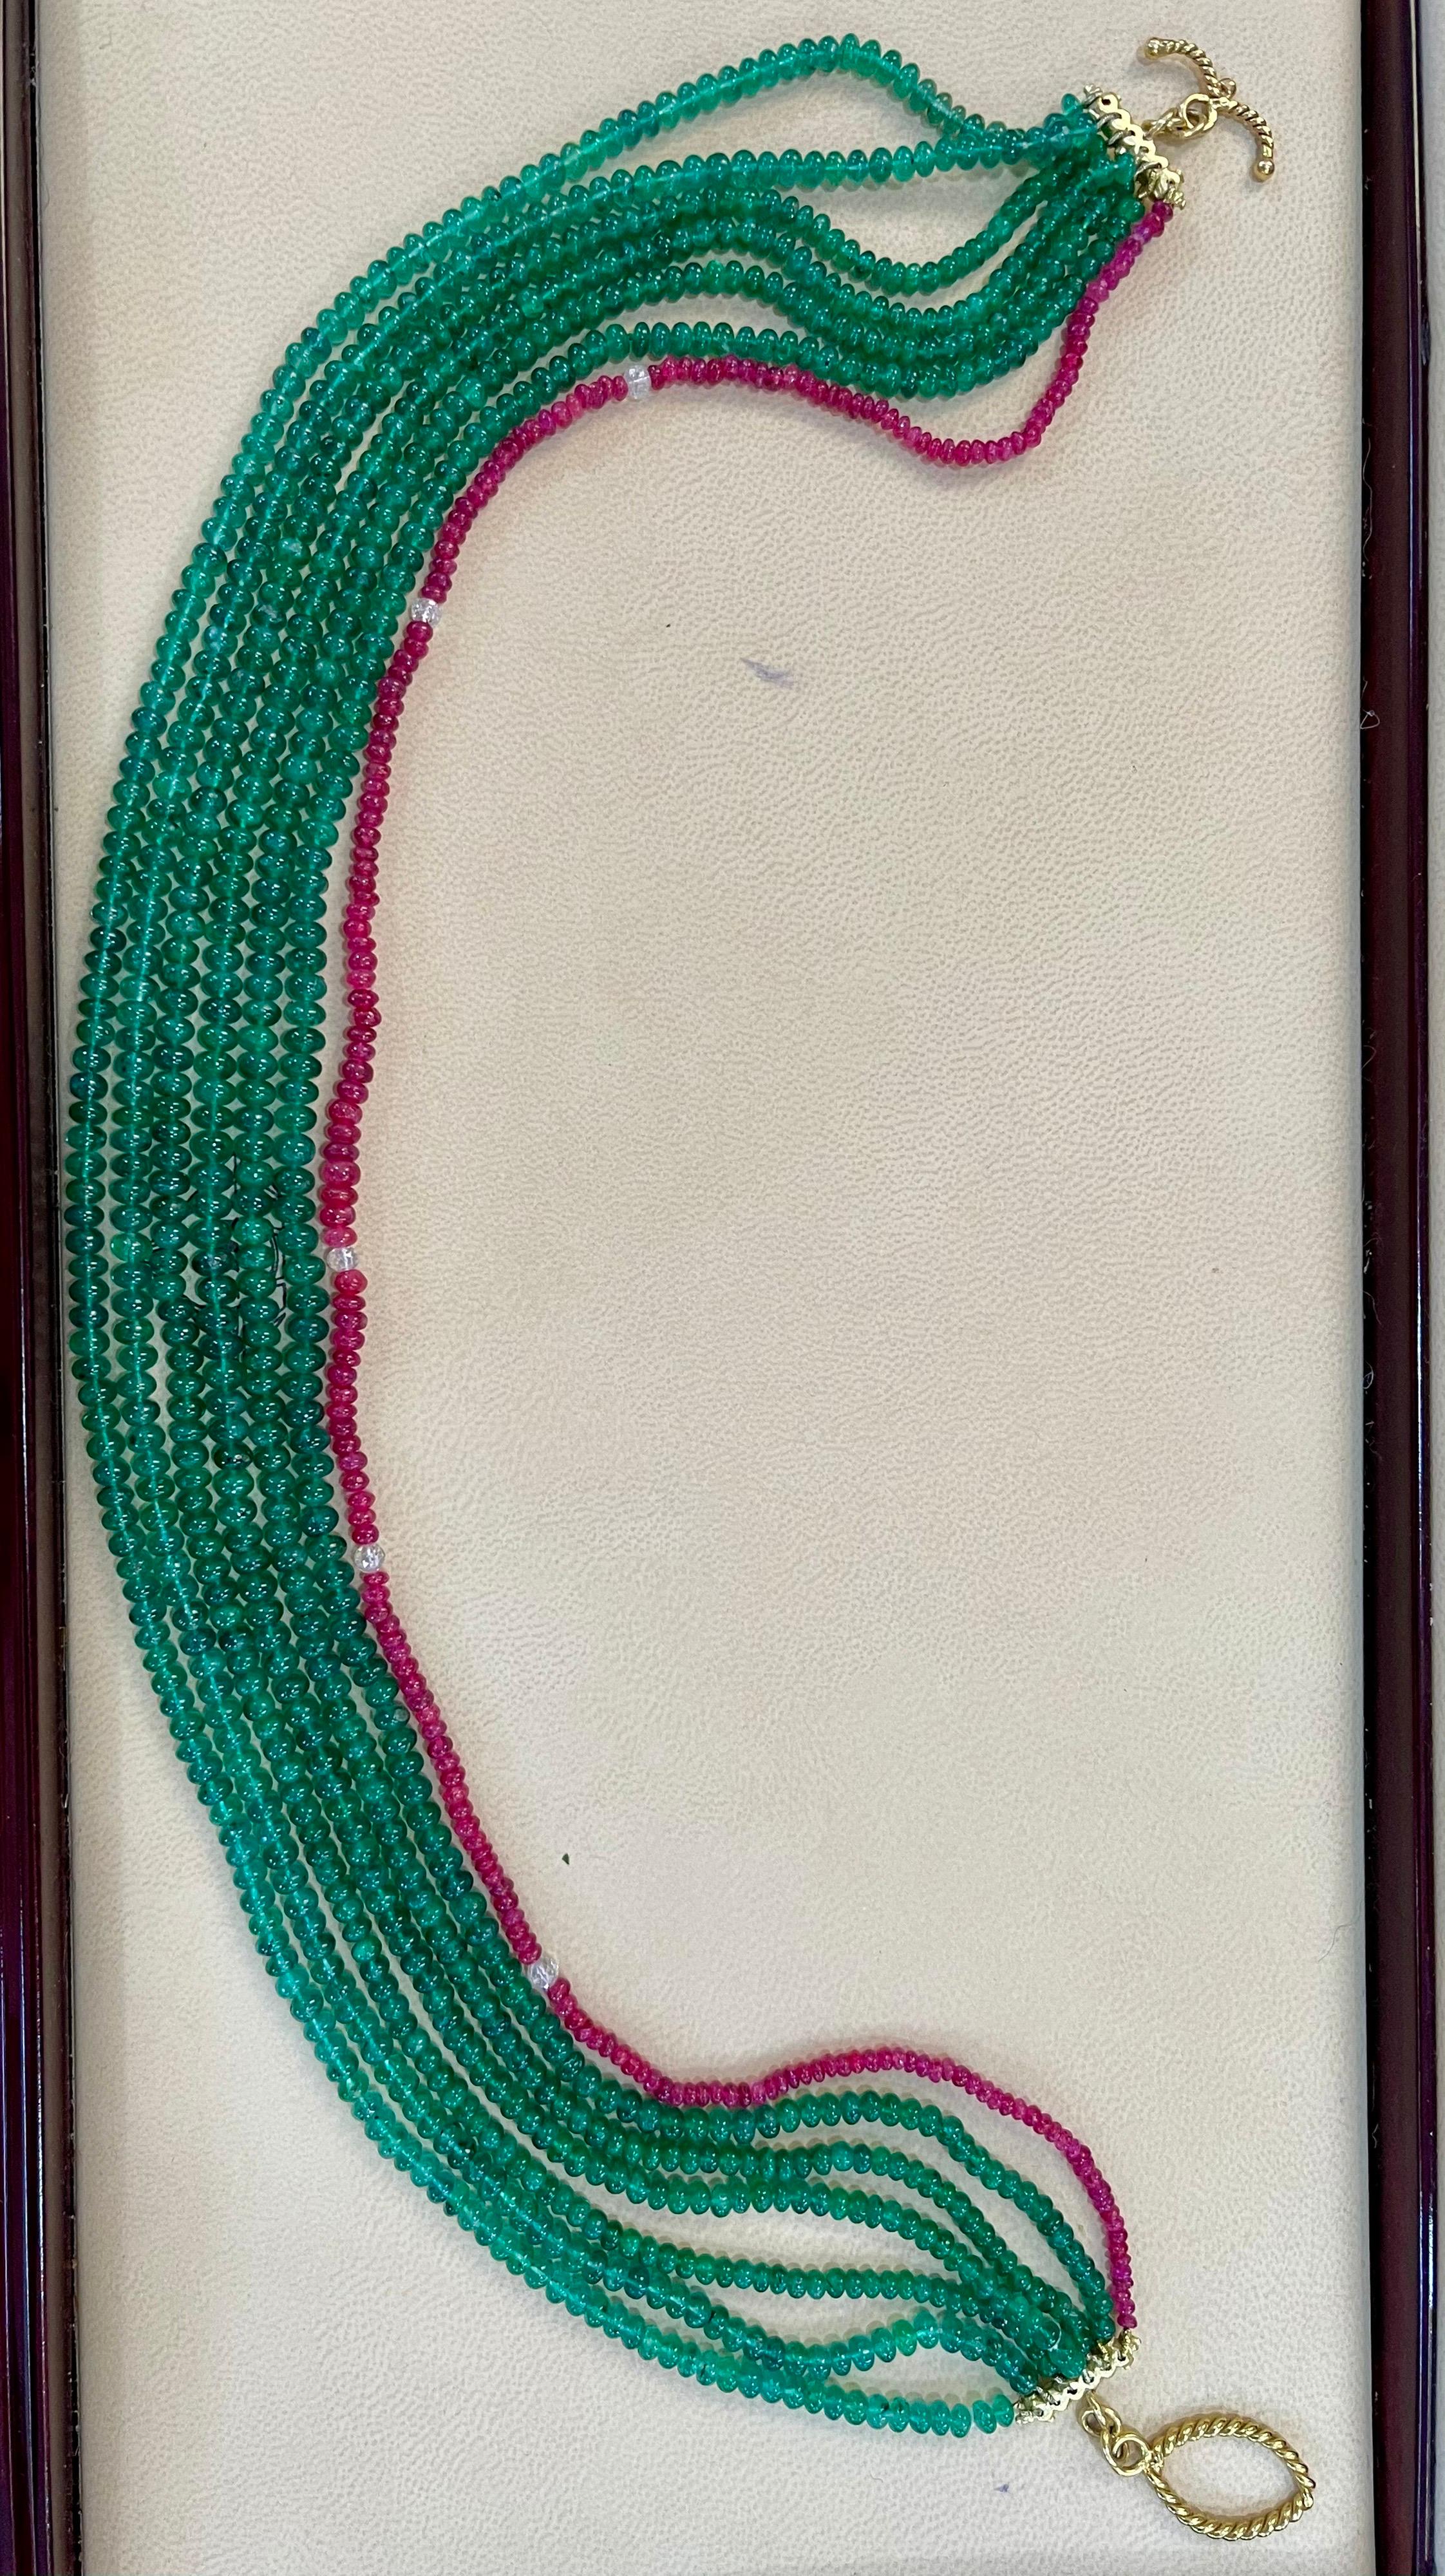 360 Carat Emerald, Burma Ruby and Diamond Beads Necklace 18 Karat Yellow Gold For Sale 11